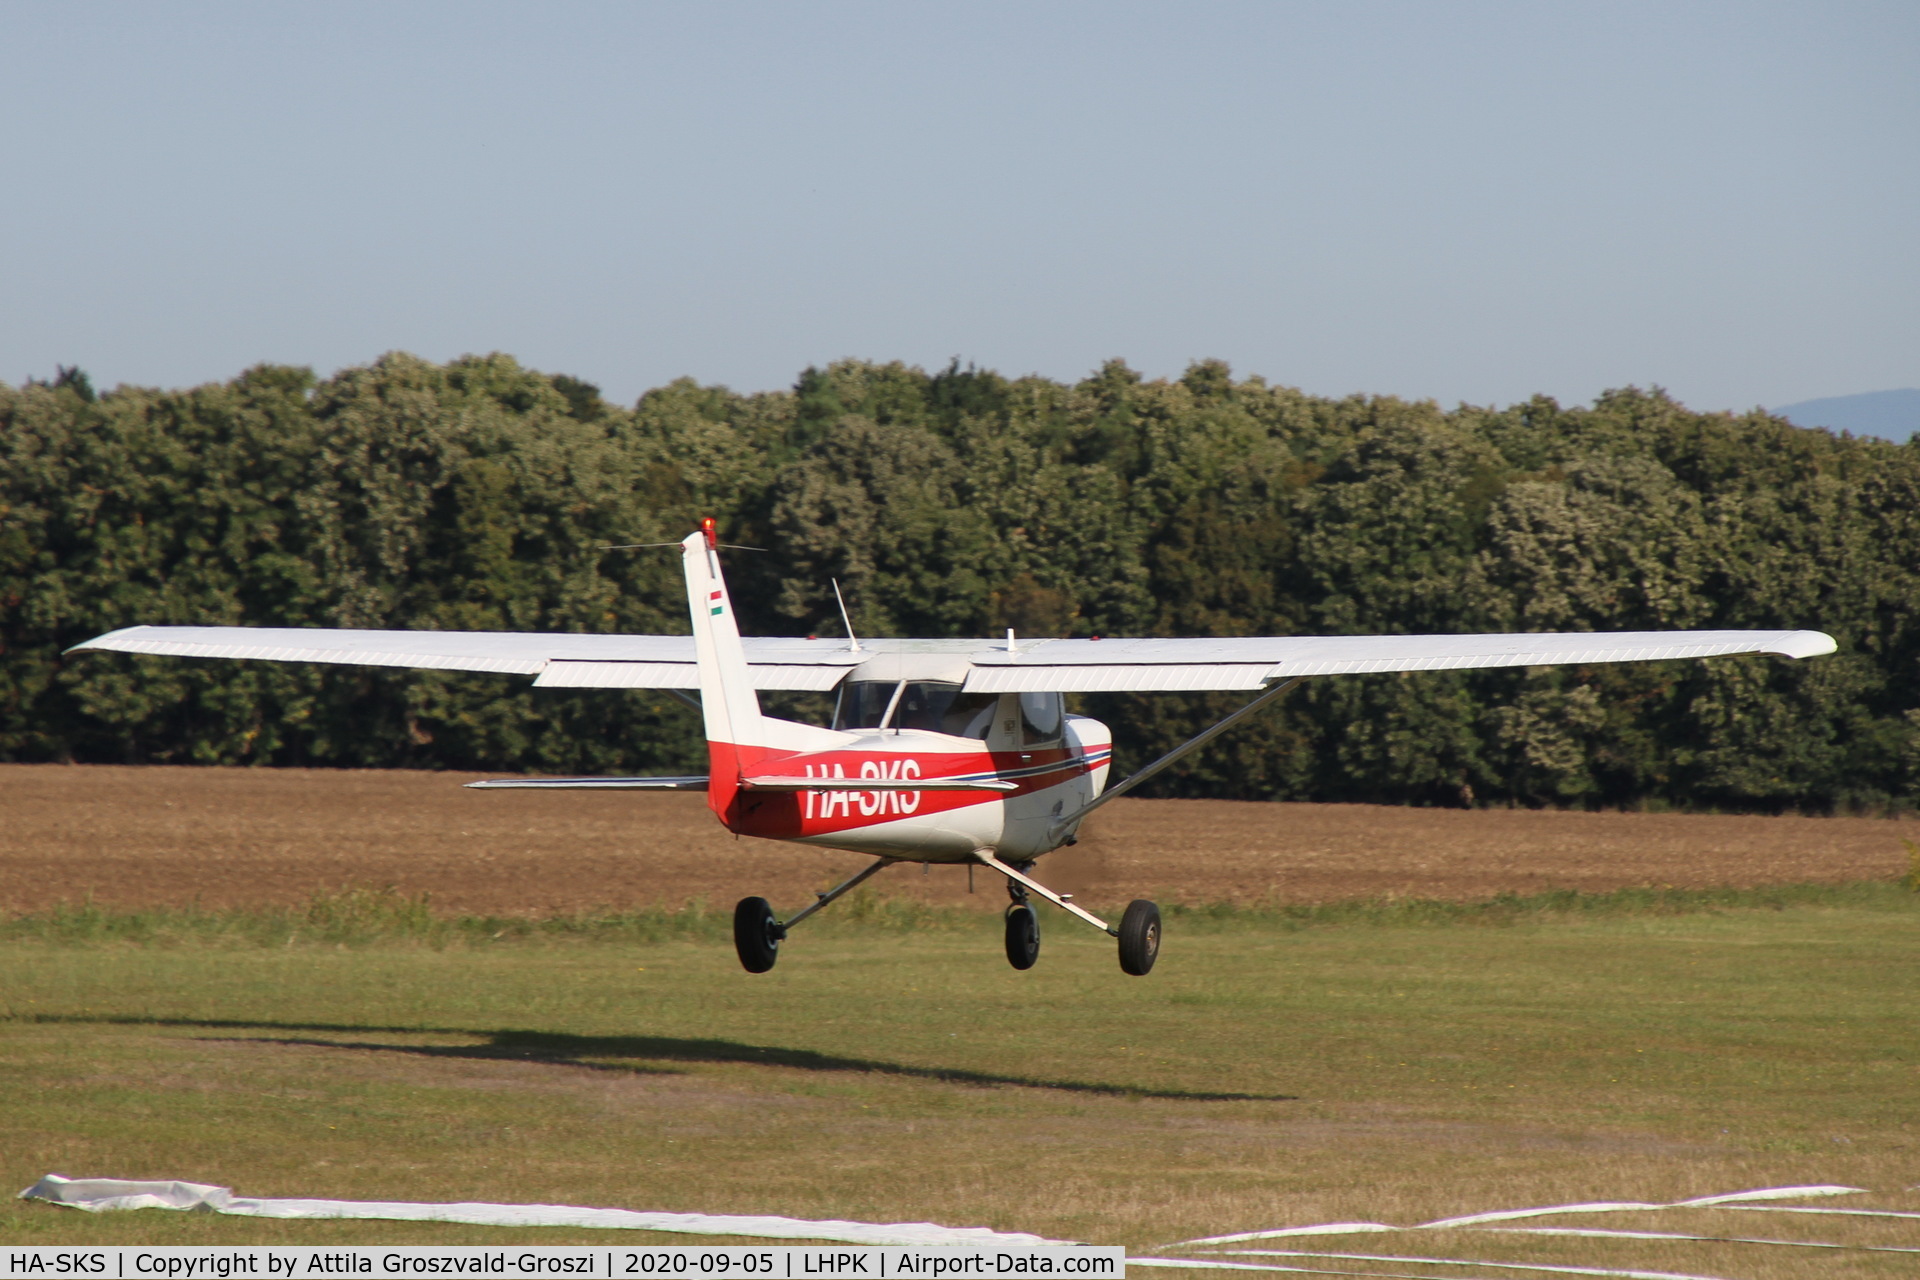 HA-SKS, 1984 Cessna 152 C/N 15285904, LHPK - Papkutapuszta Airfield, Hungary